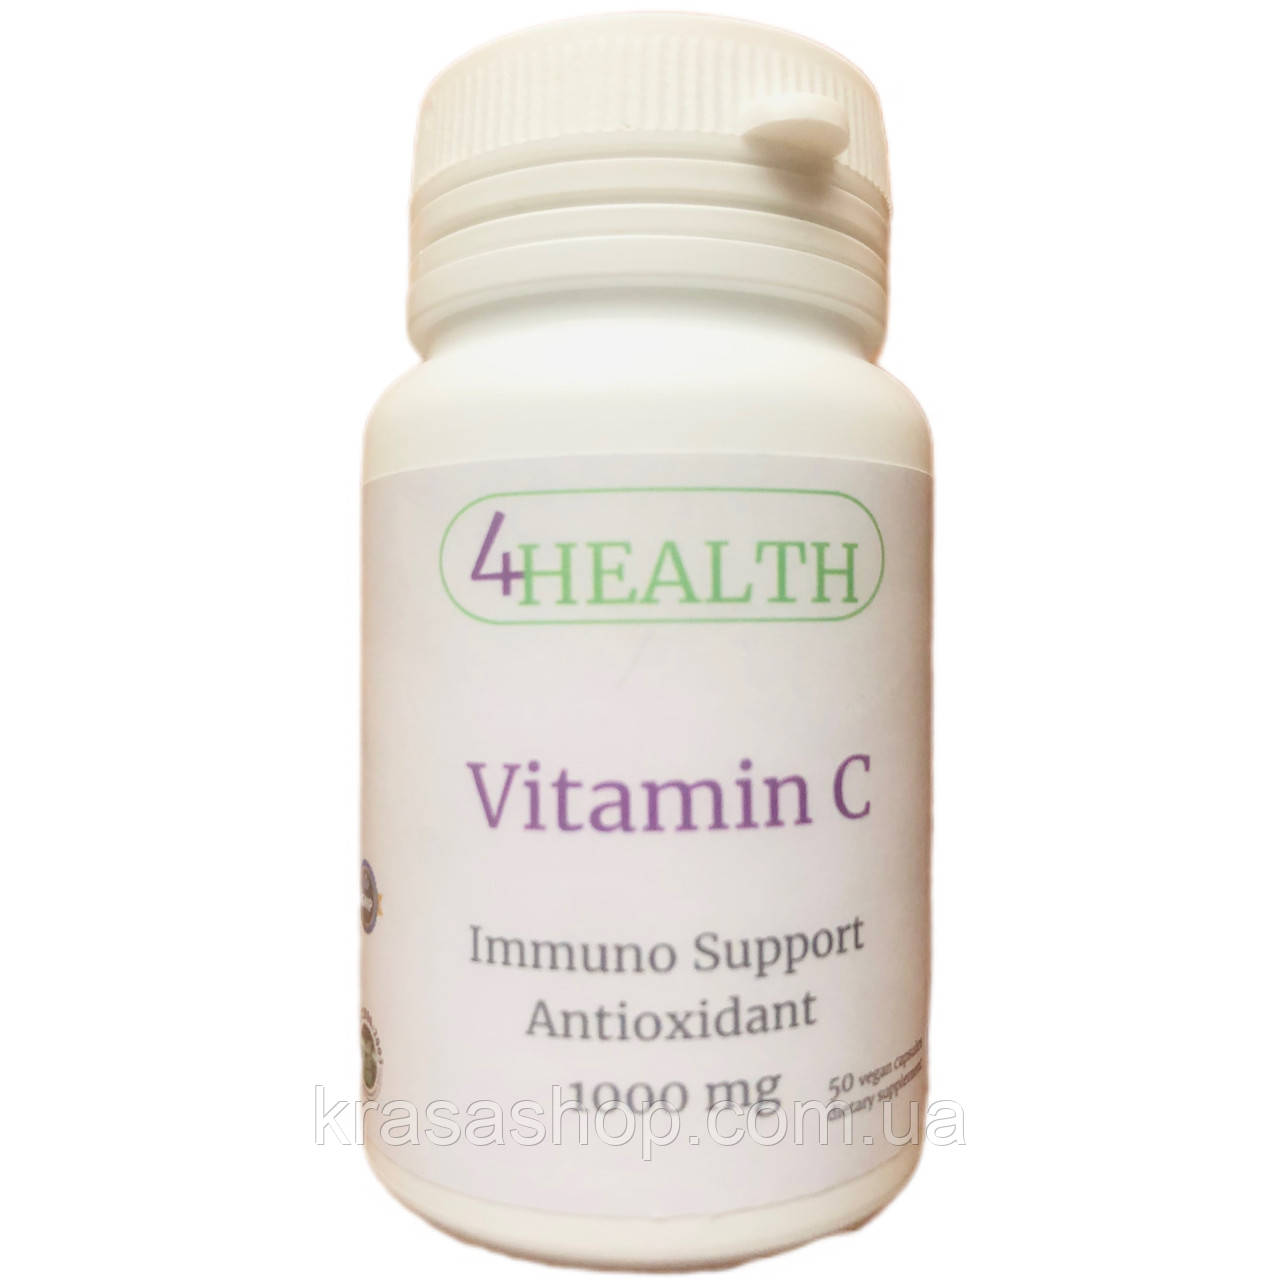 4HEALTH - Vitamin C (Immuno Support, Antioxidant) 1000 mg (50 капс)